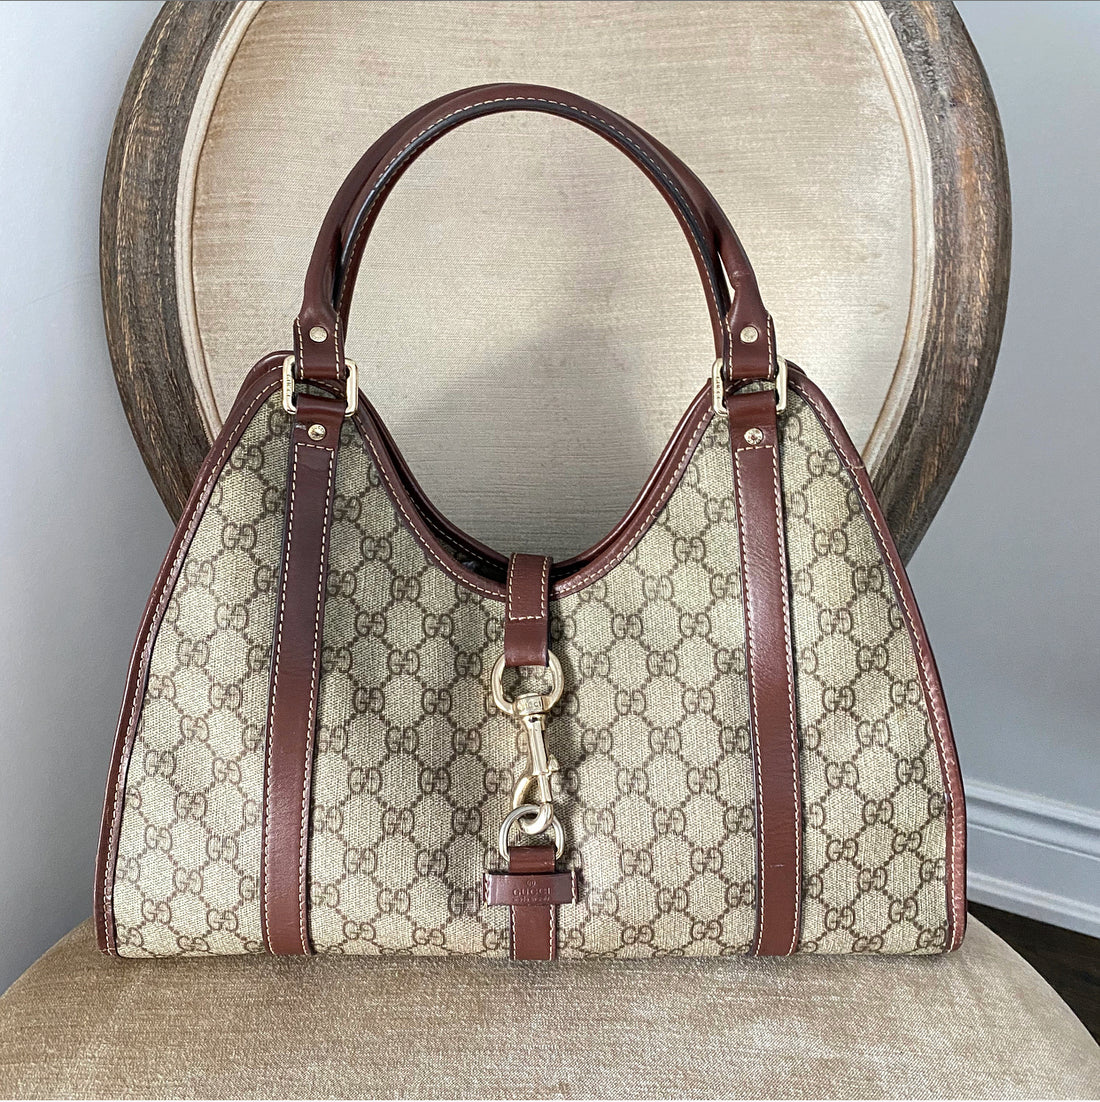 Gucci Authenticated Joy Handbag